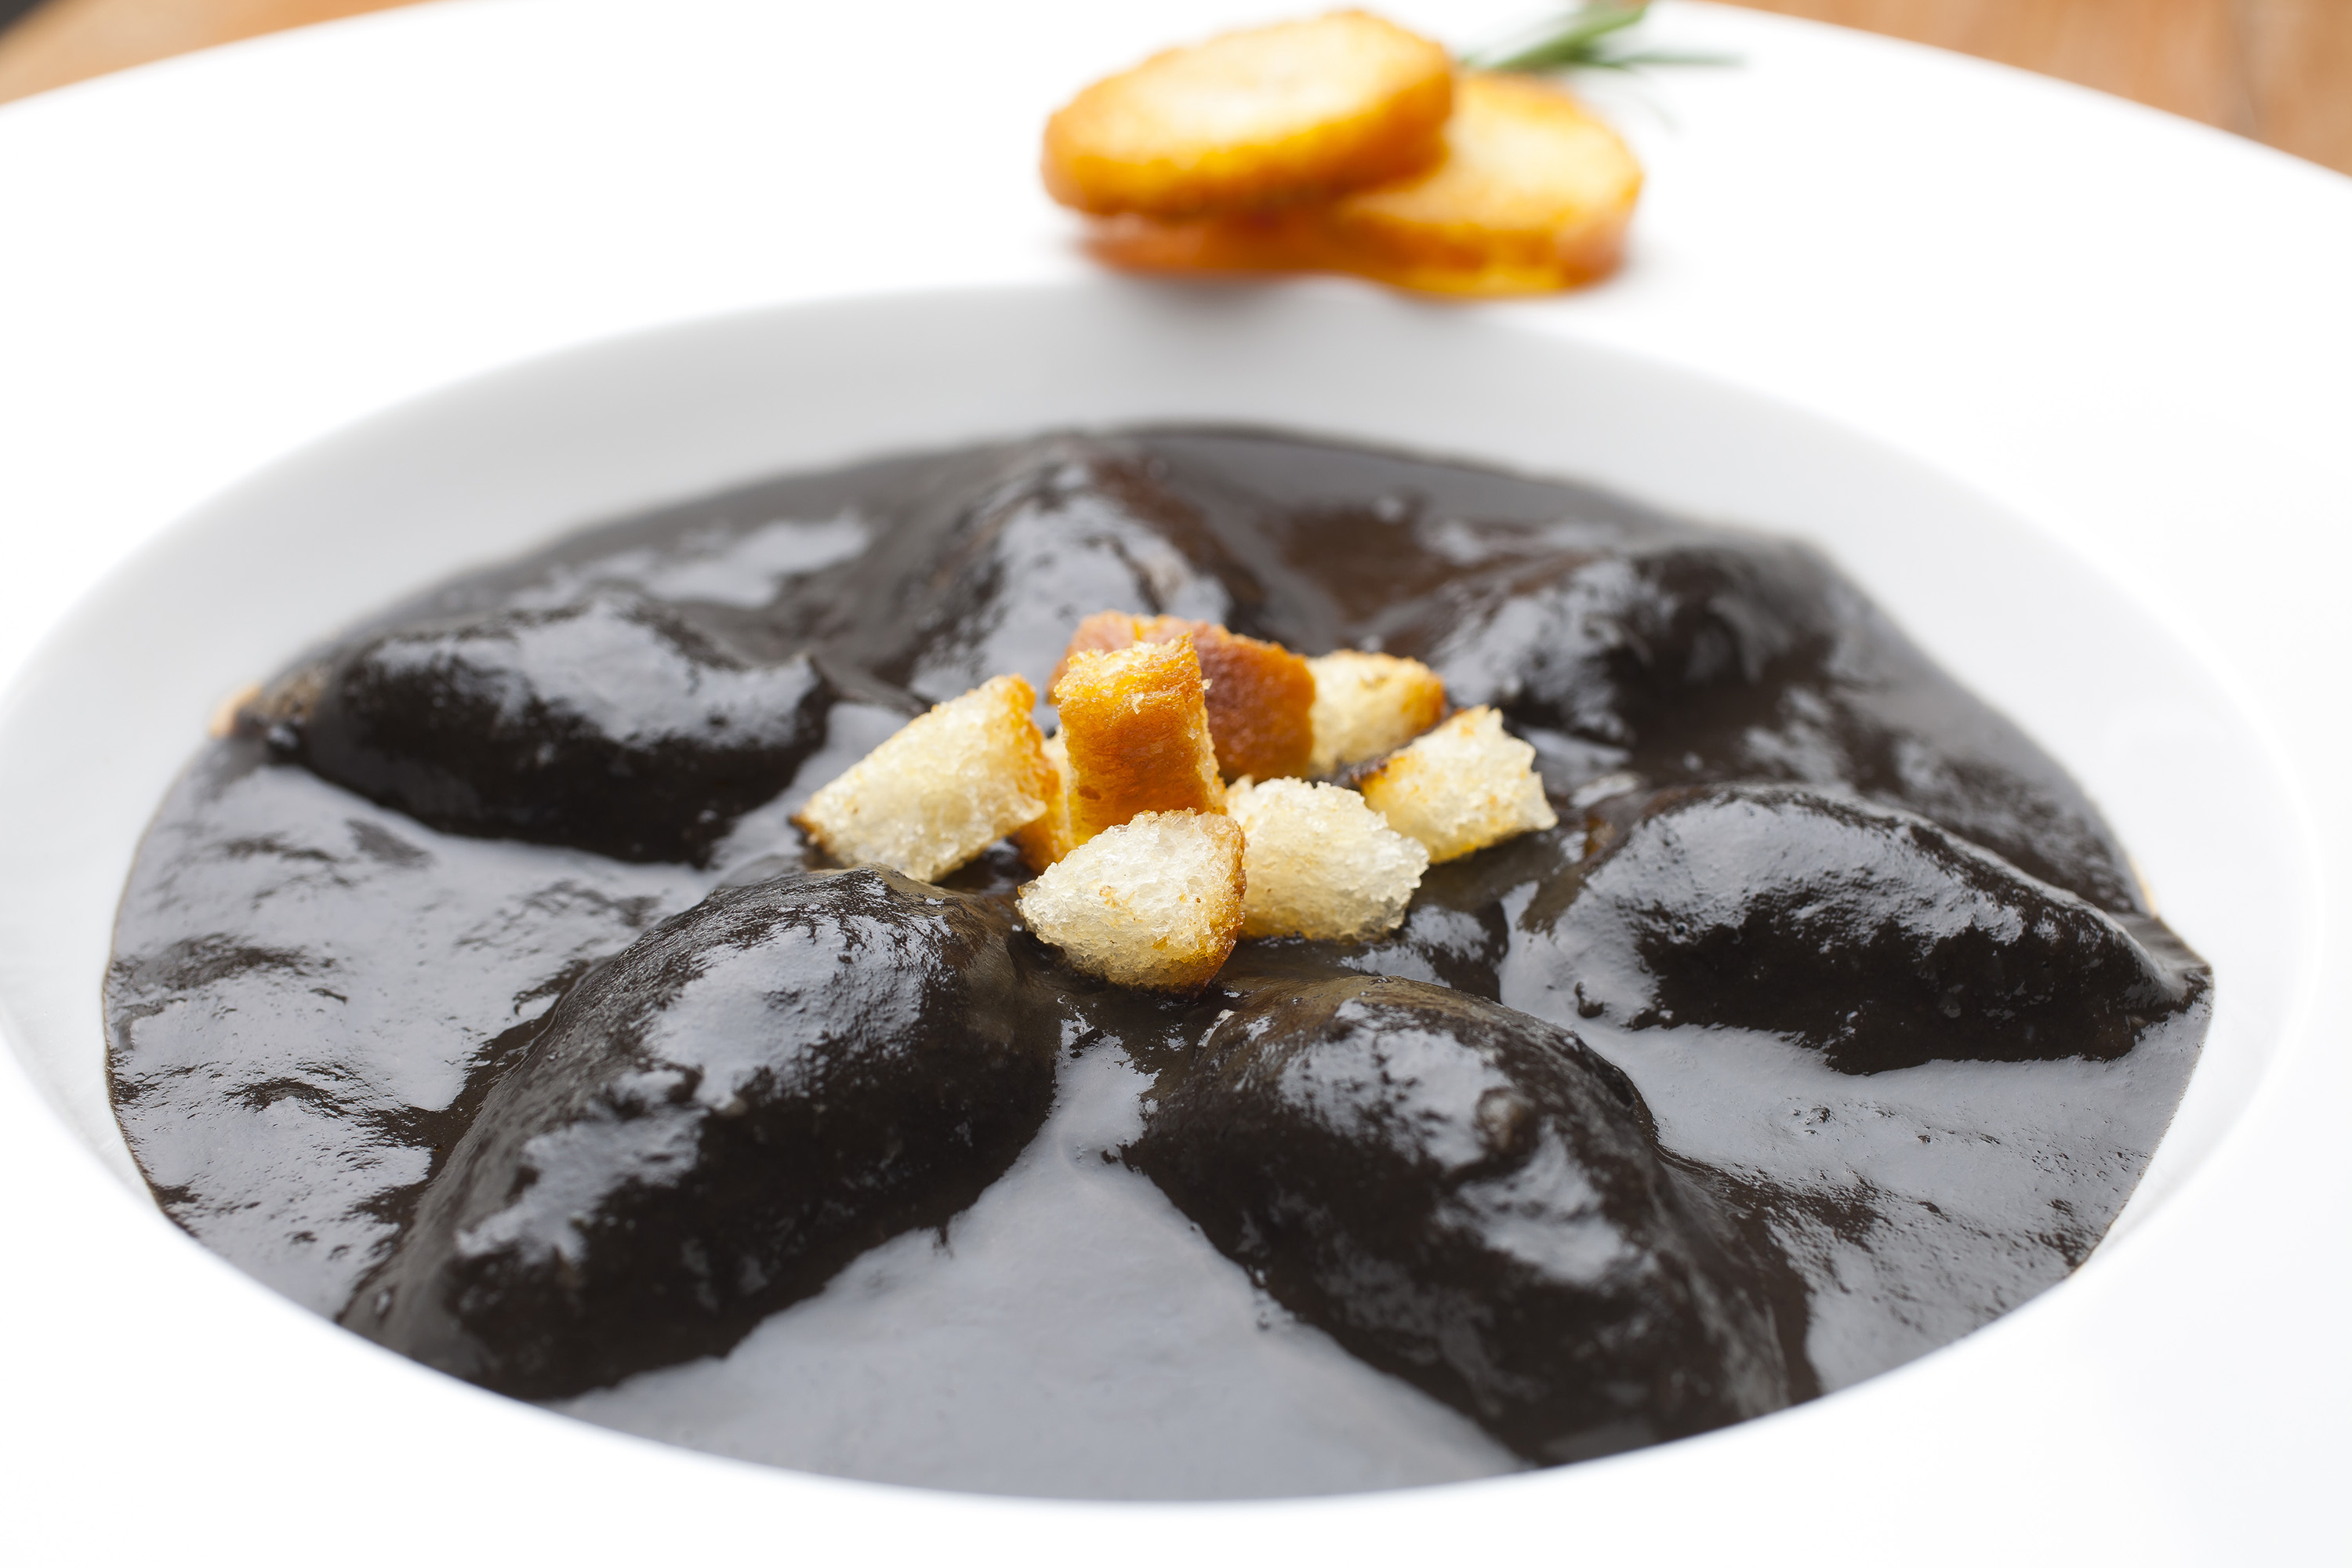 Chipirones en su Tinta | Traditional Squid Dish From Basque Country, Spain